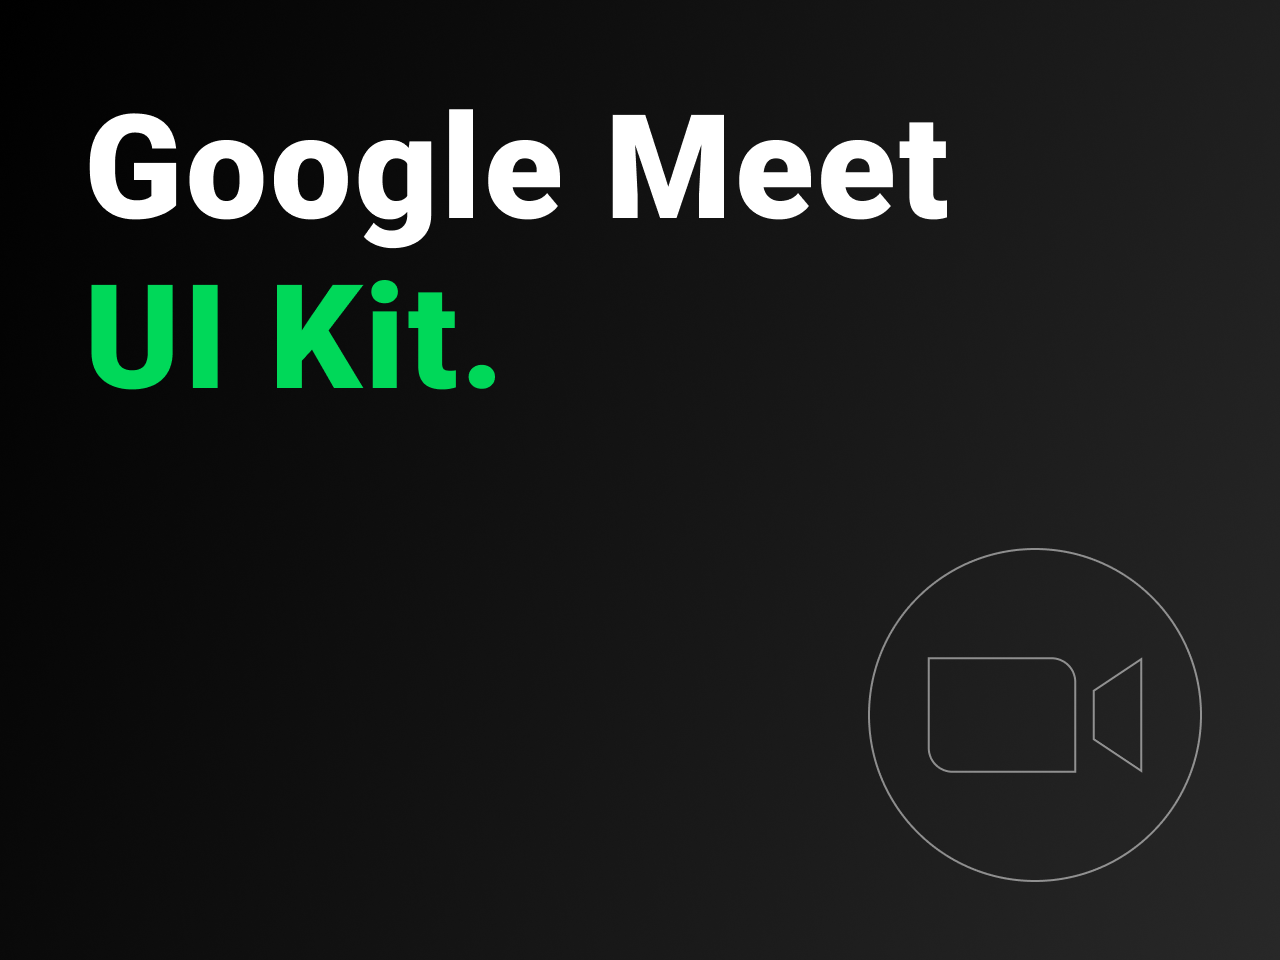 Google Meet视频会议服务UI素材下载 - 适用于Google Meet视频会议服务的移动应用界面设计 figma格式-UI/UX-到位啦UI